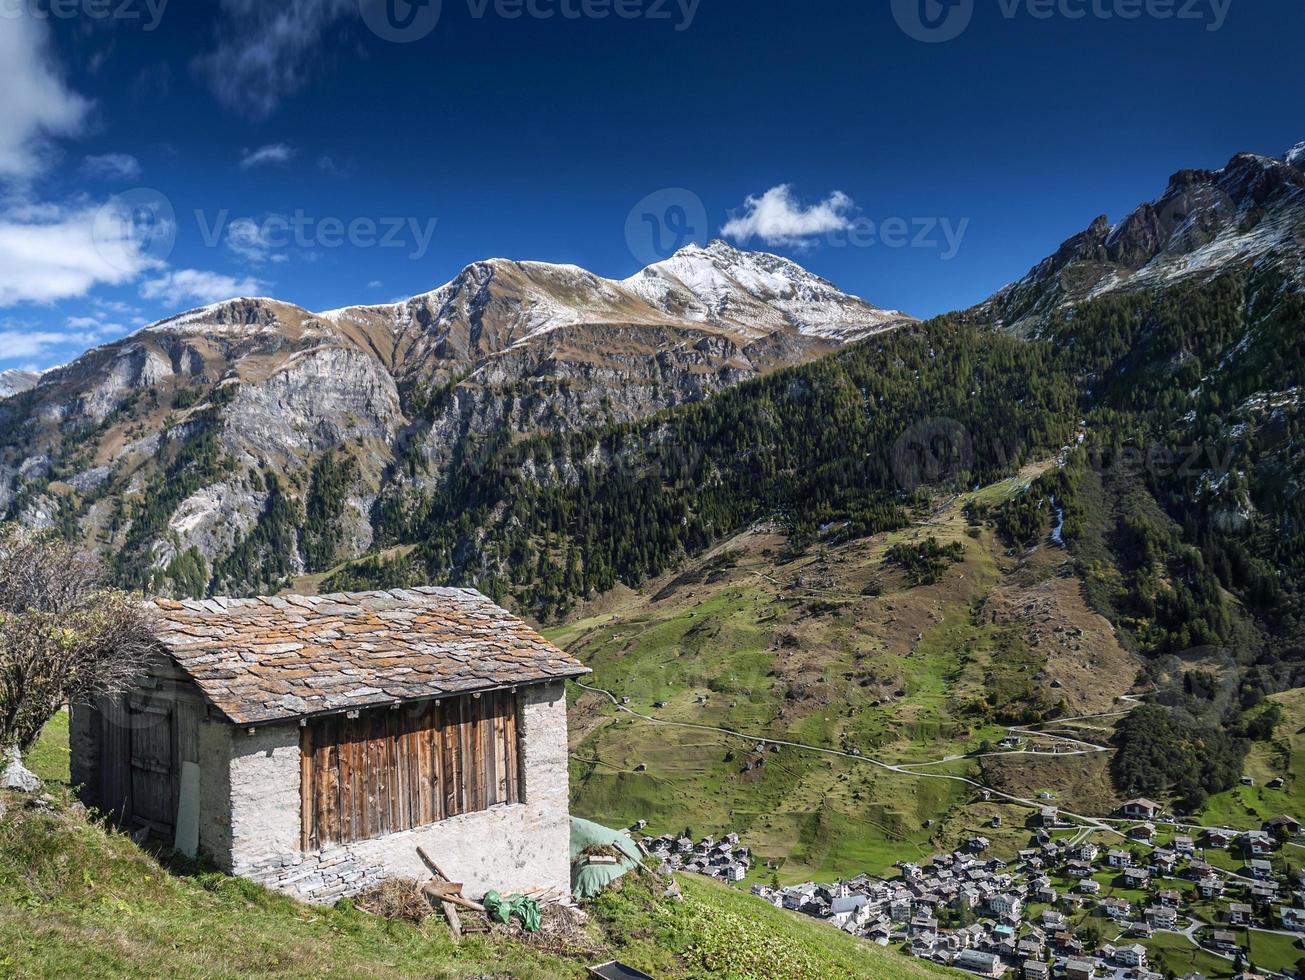 vals dorp alpine vallei landschap en huizen in centrale alpen zwitserland foto